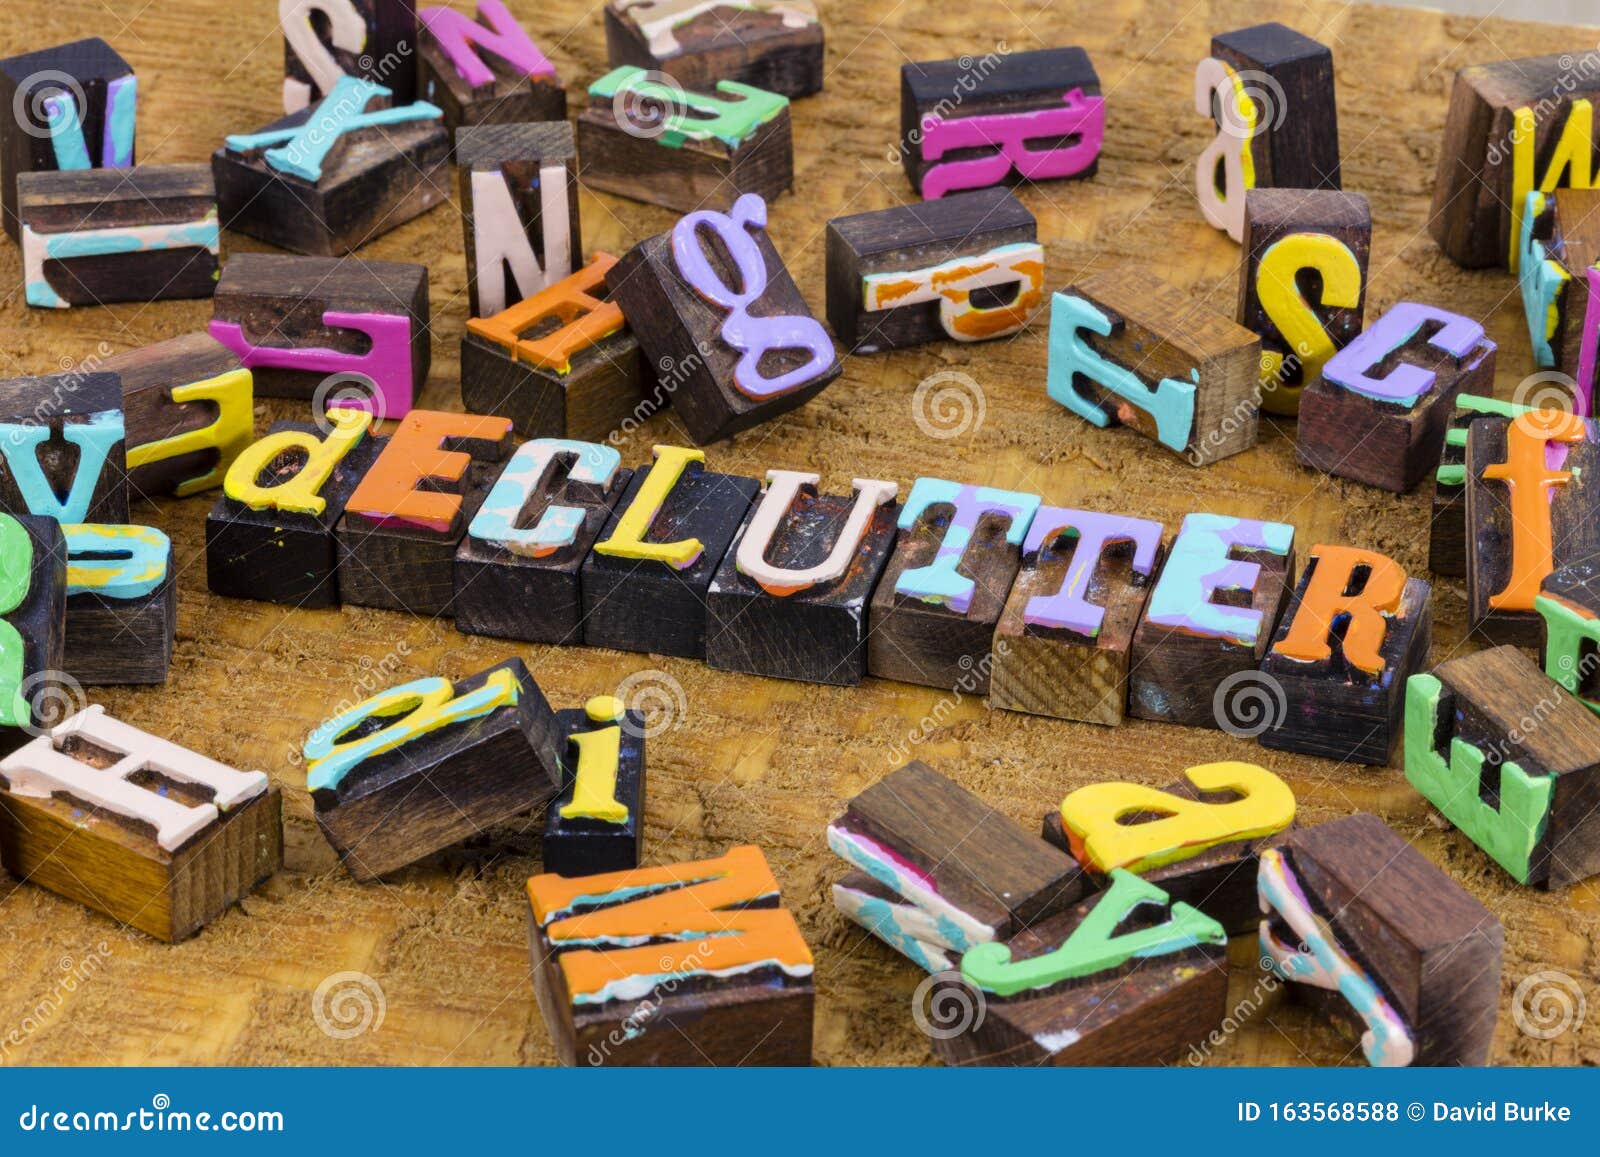 declutter clutter organize life simplify messy random minimalism